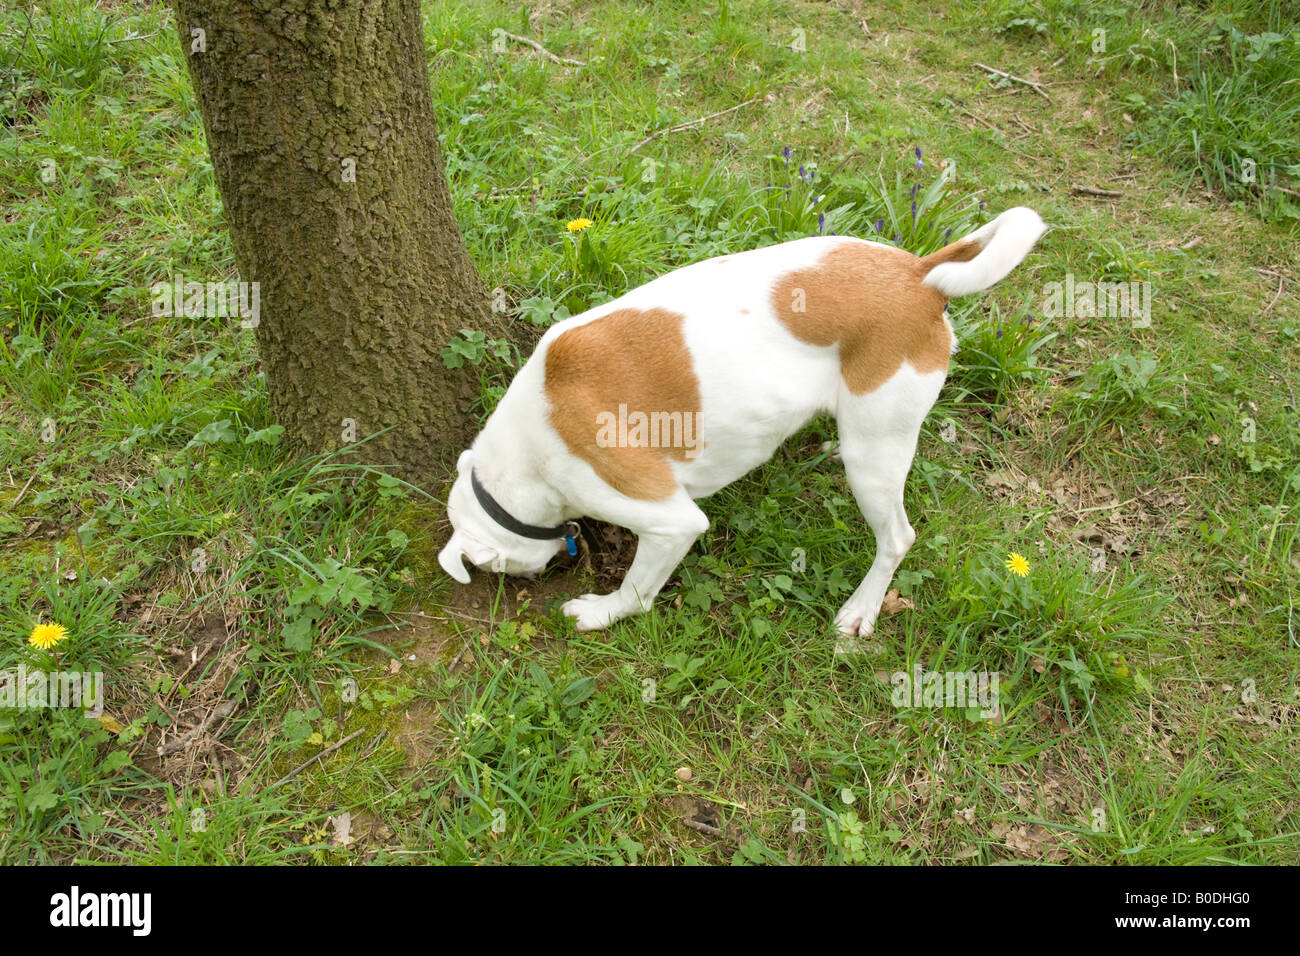 Crossbreed dog Hampshire England Stock Photo